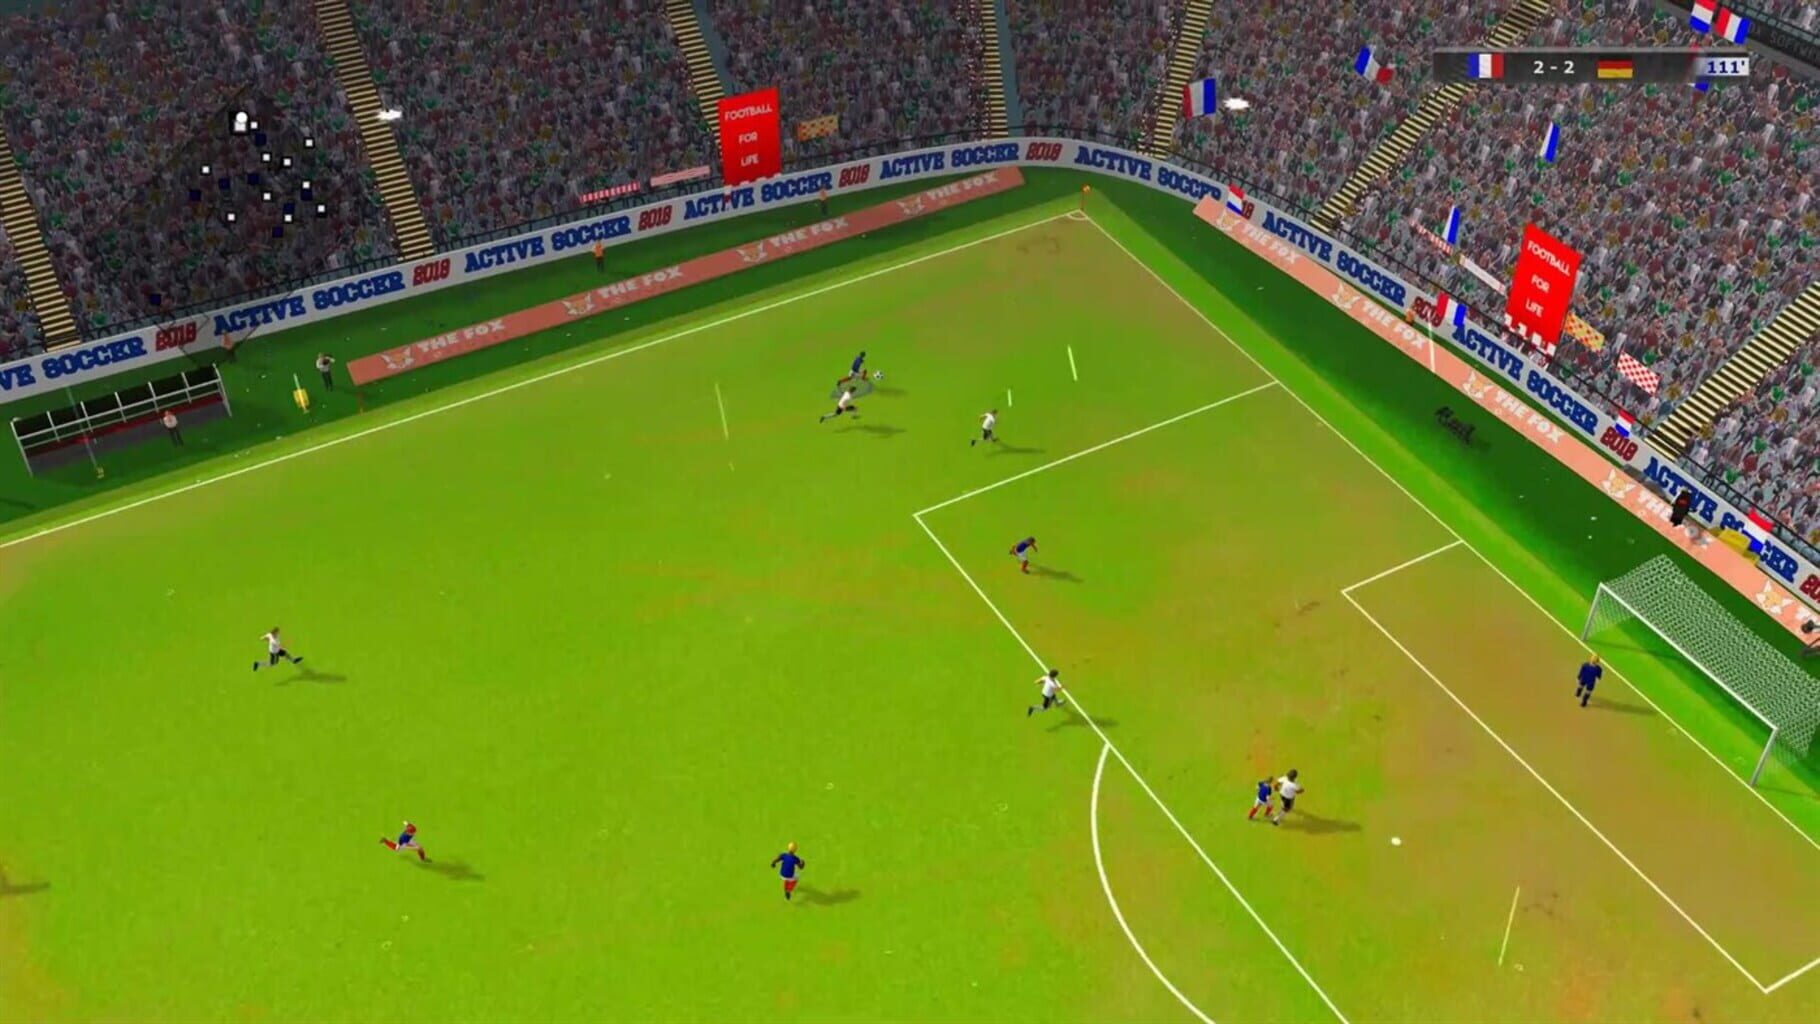 Active Soccer 2019 screenshot